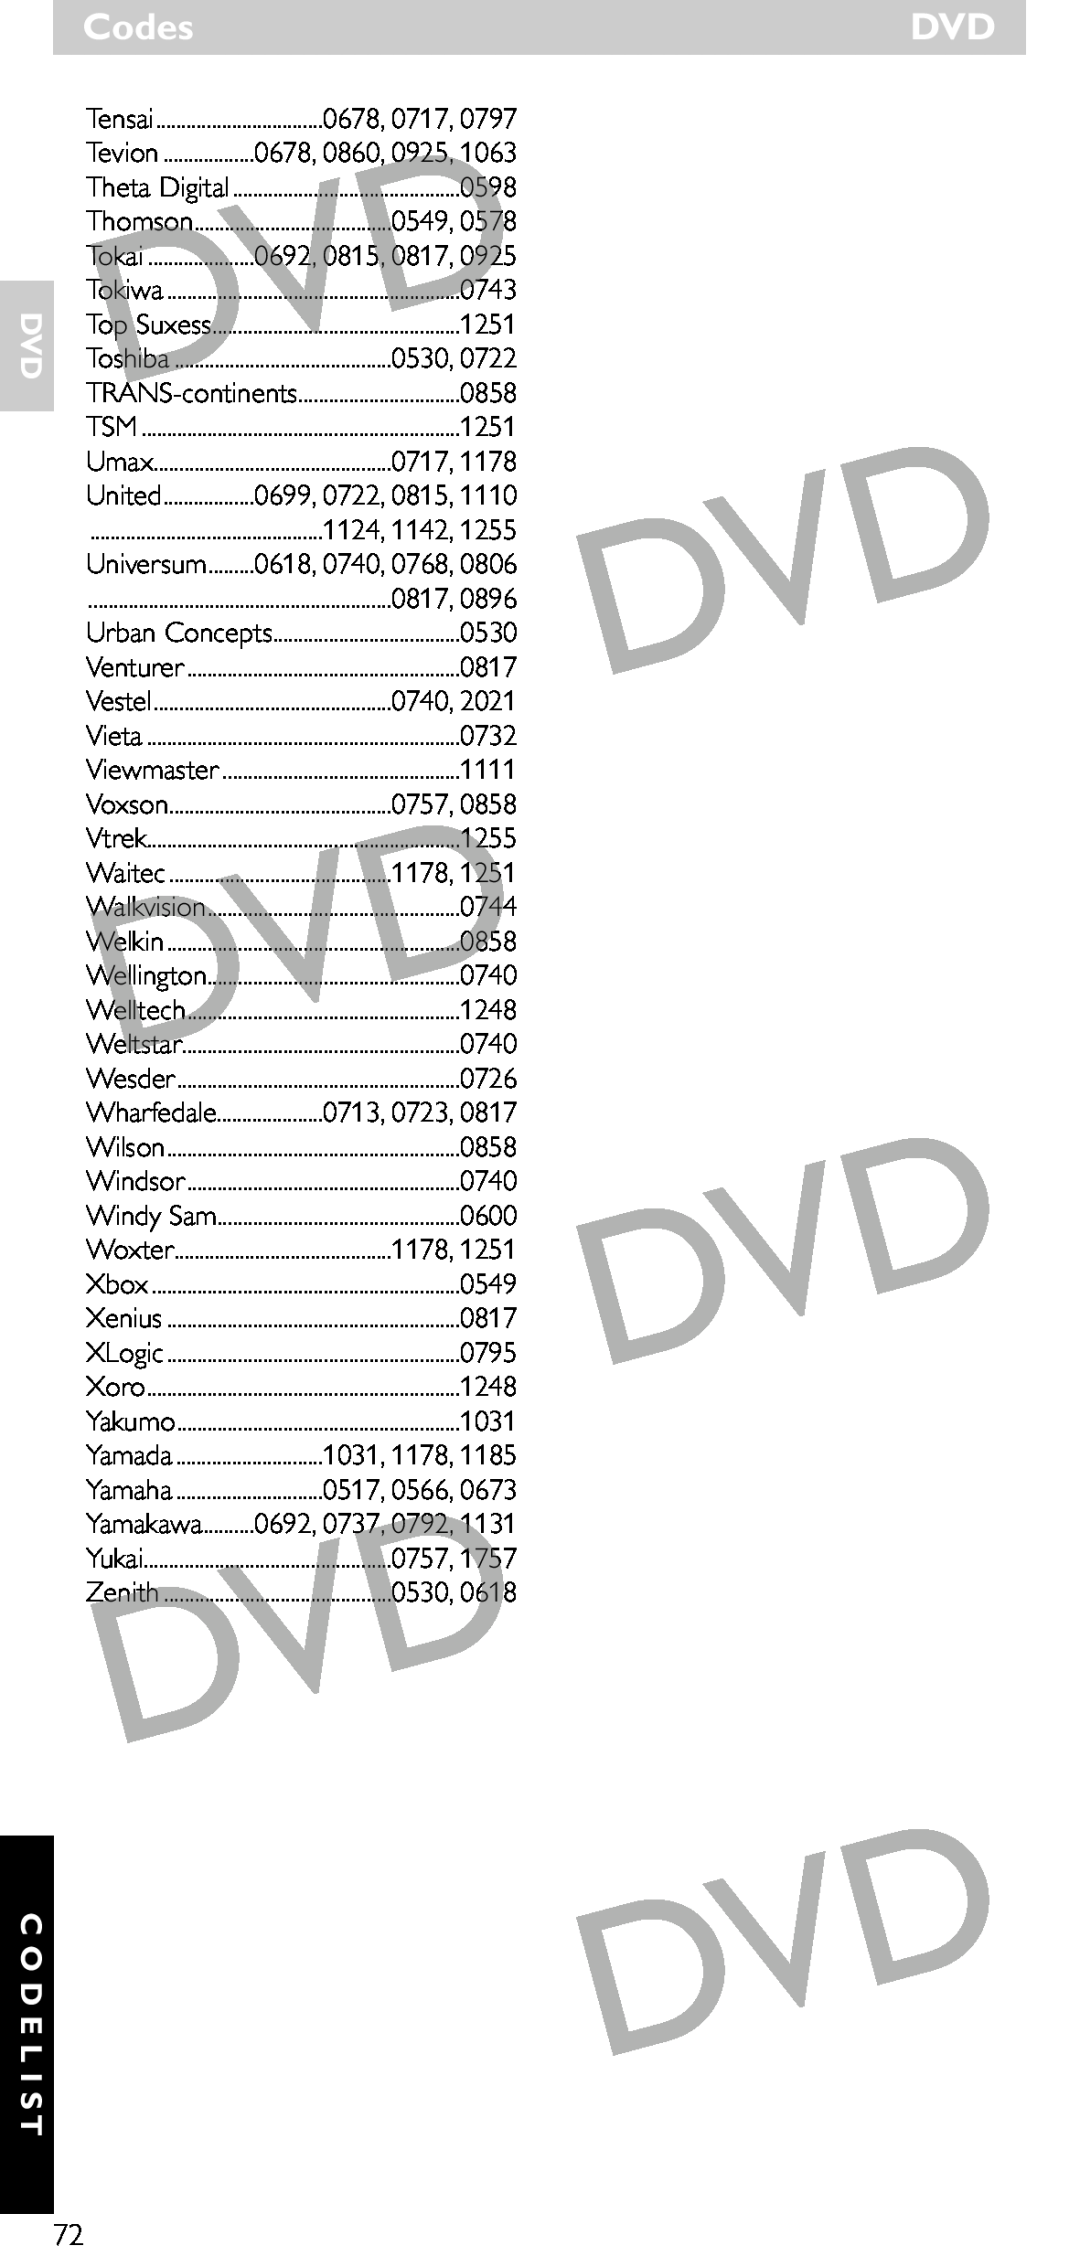 Philips SRU 5020/86 manual Dvd Dvd, Codes, 0598, 0549, TRANS-continents, United, Universum, Yamakawa, Tevion 